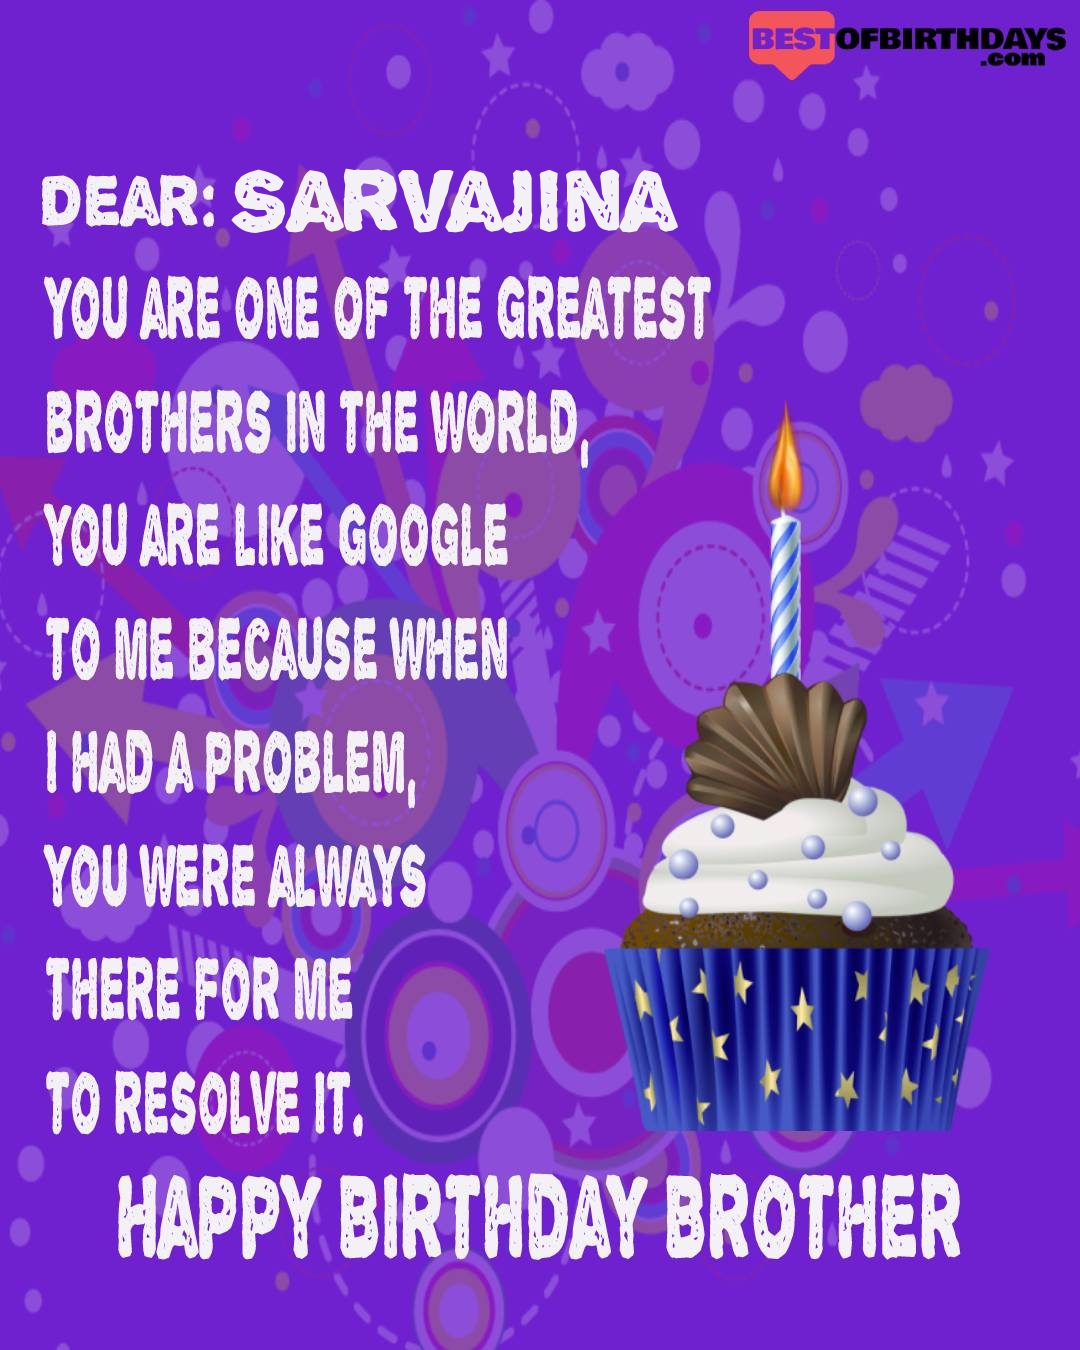 Happy birthday sarvajina bhai brother bro